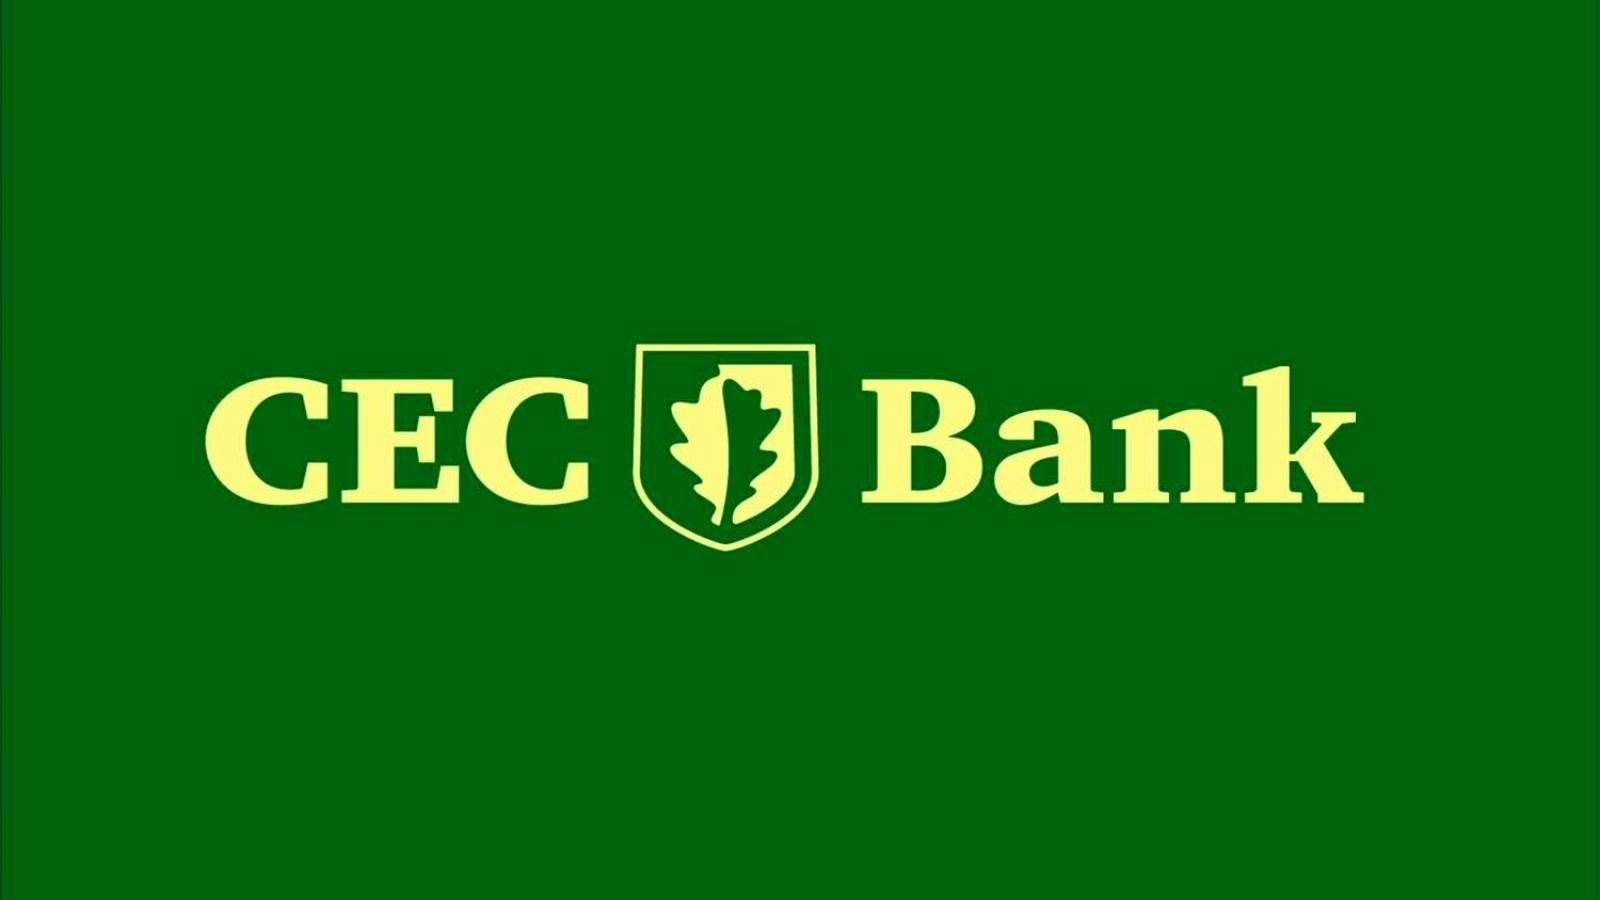 CEC Bank Anunta Oficial Clientii SCHIMBARILE Importante Romania